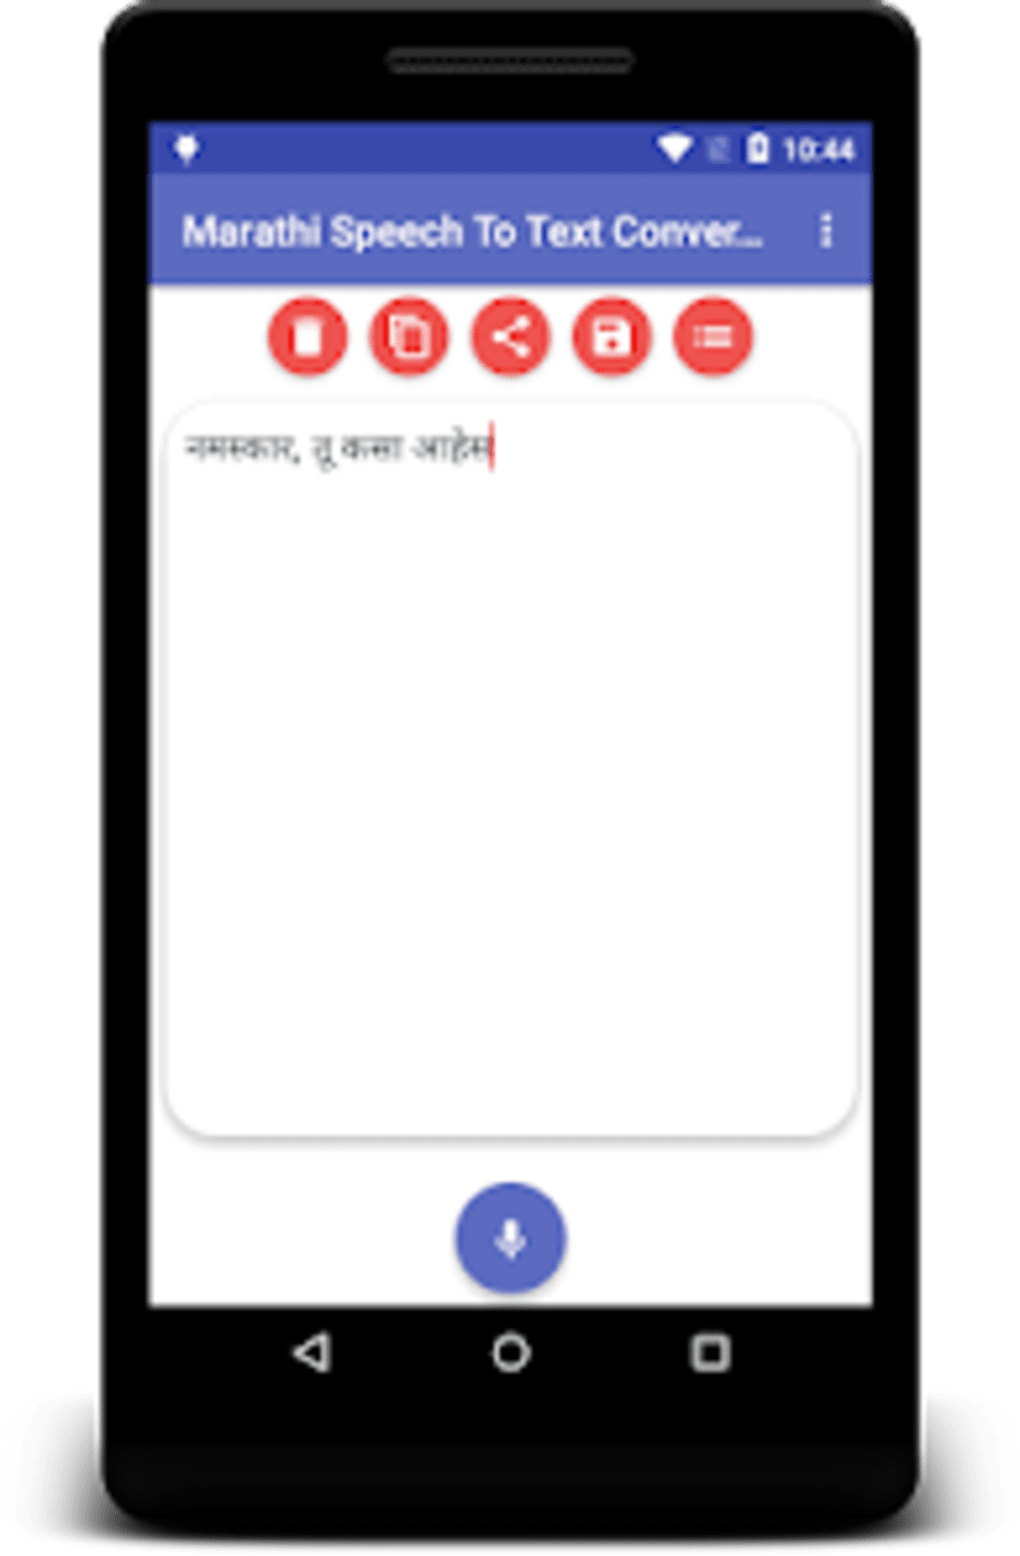 marathi-speech-to-text-convert-android